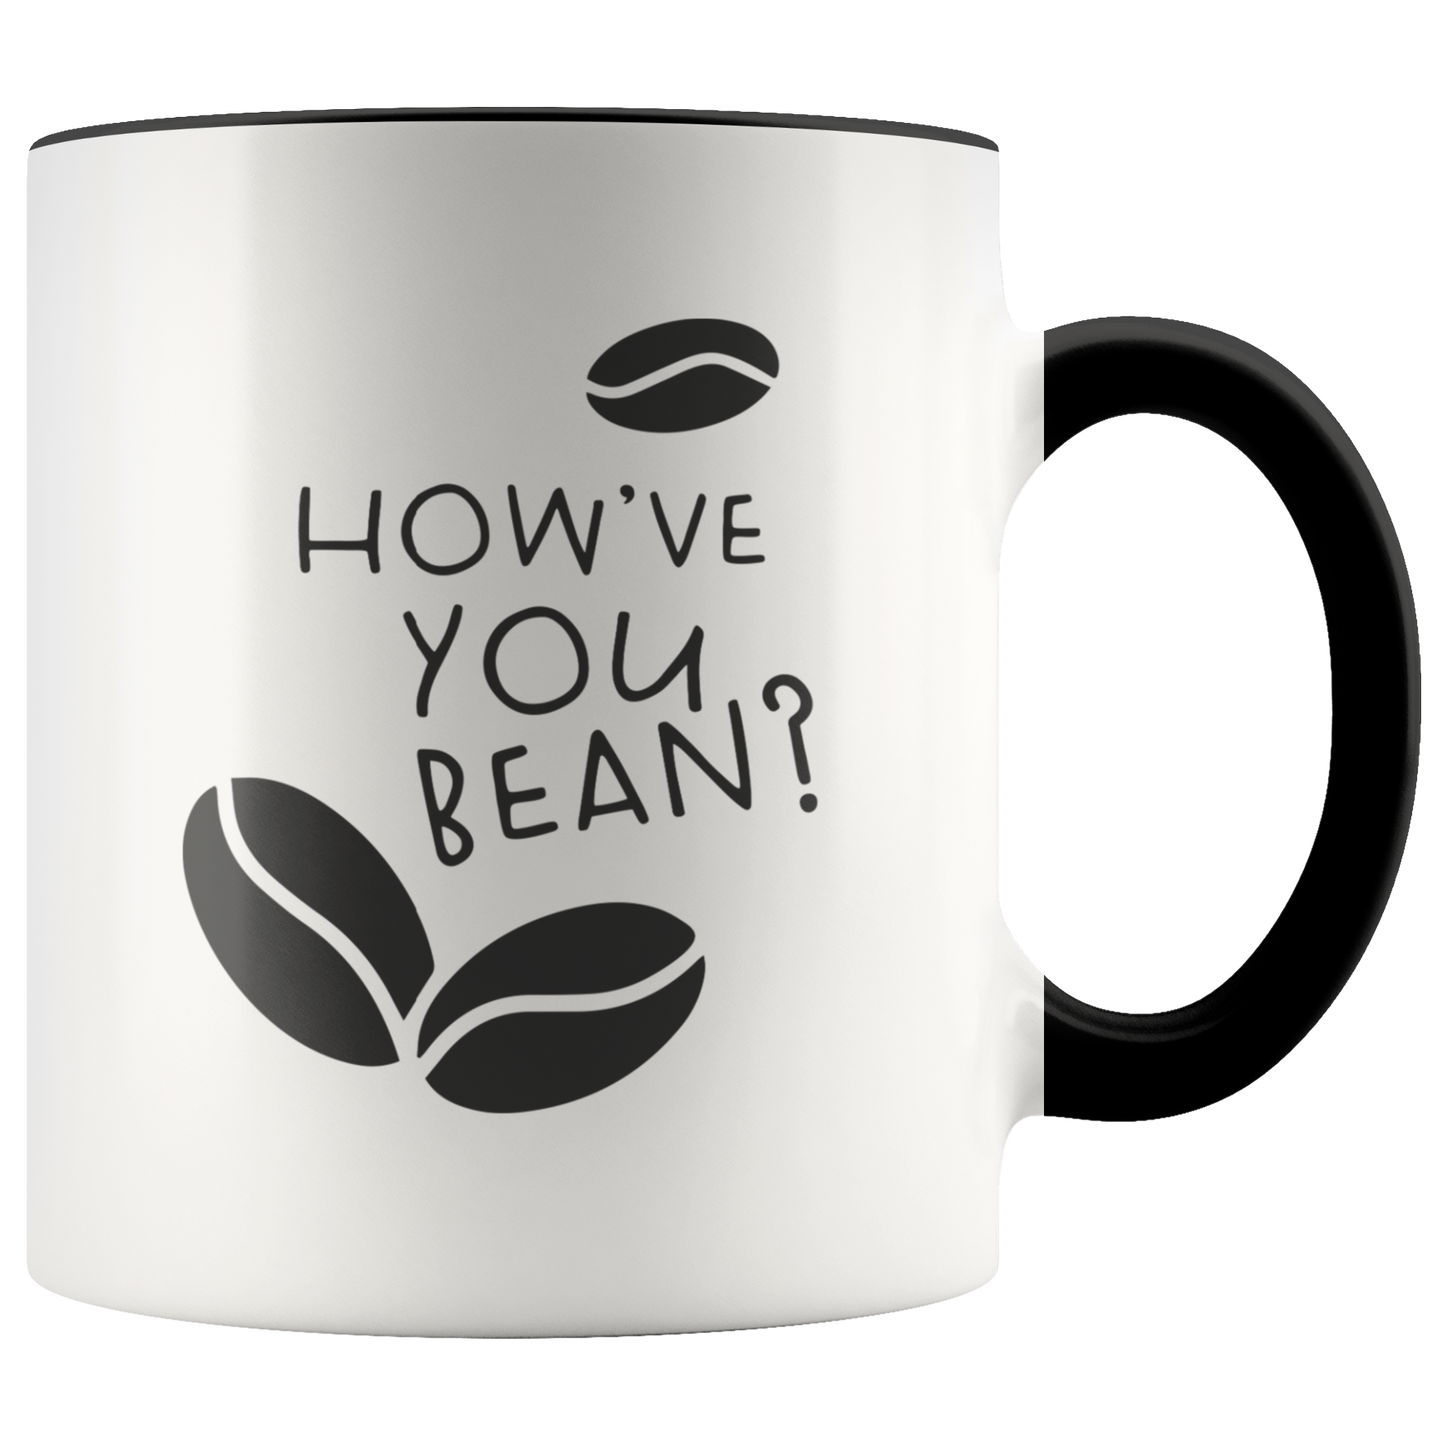 Funny Coffee Mug With Sayings, Coffee Gift for Coffee Lovers, Coffee Addict, Coffee Pun